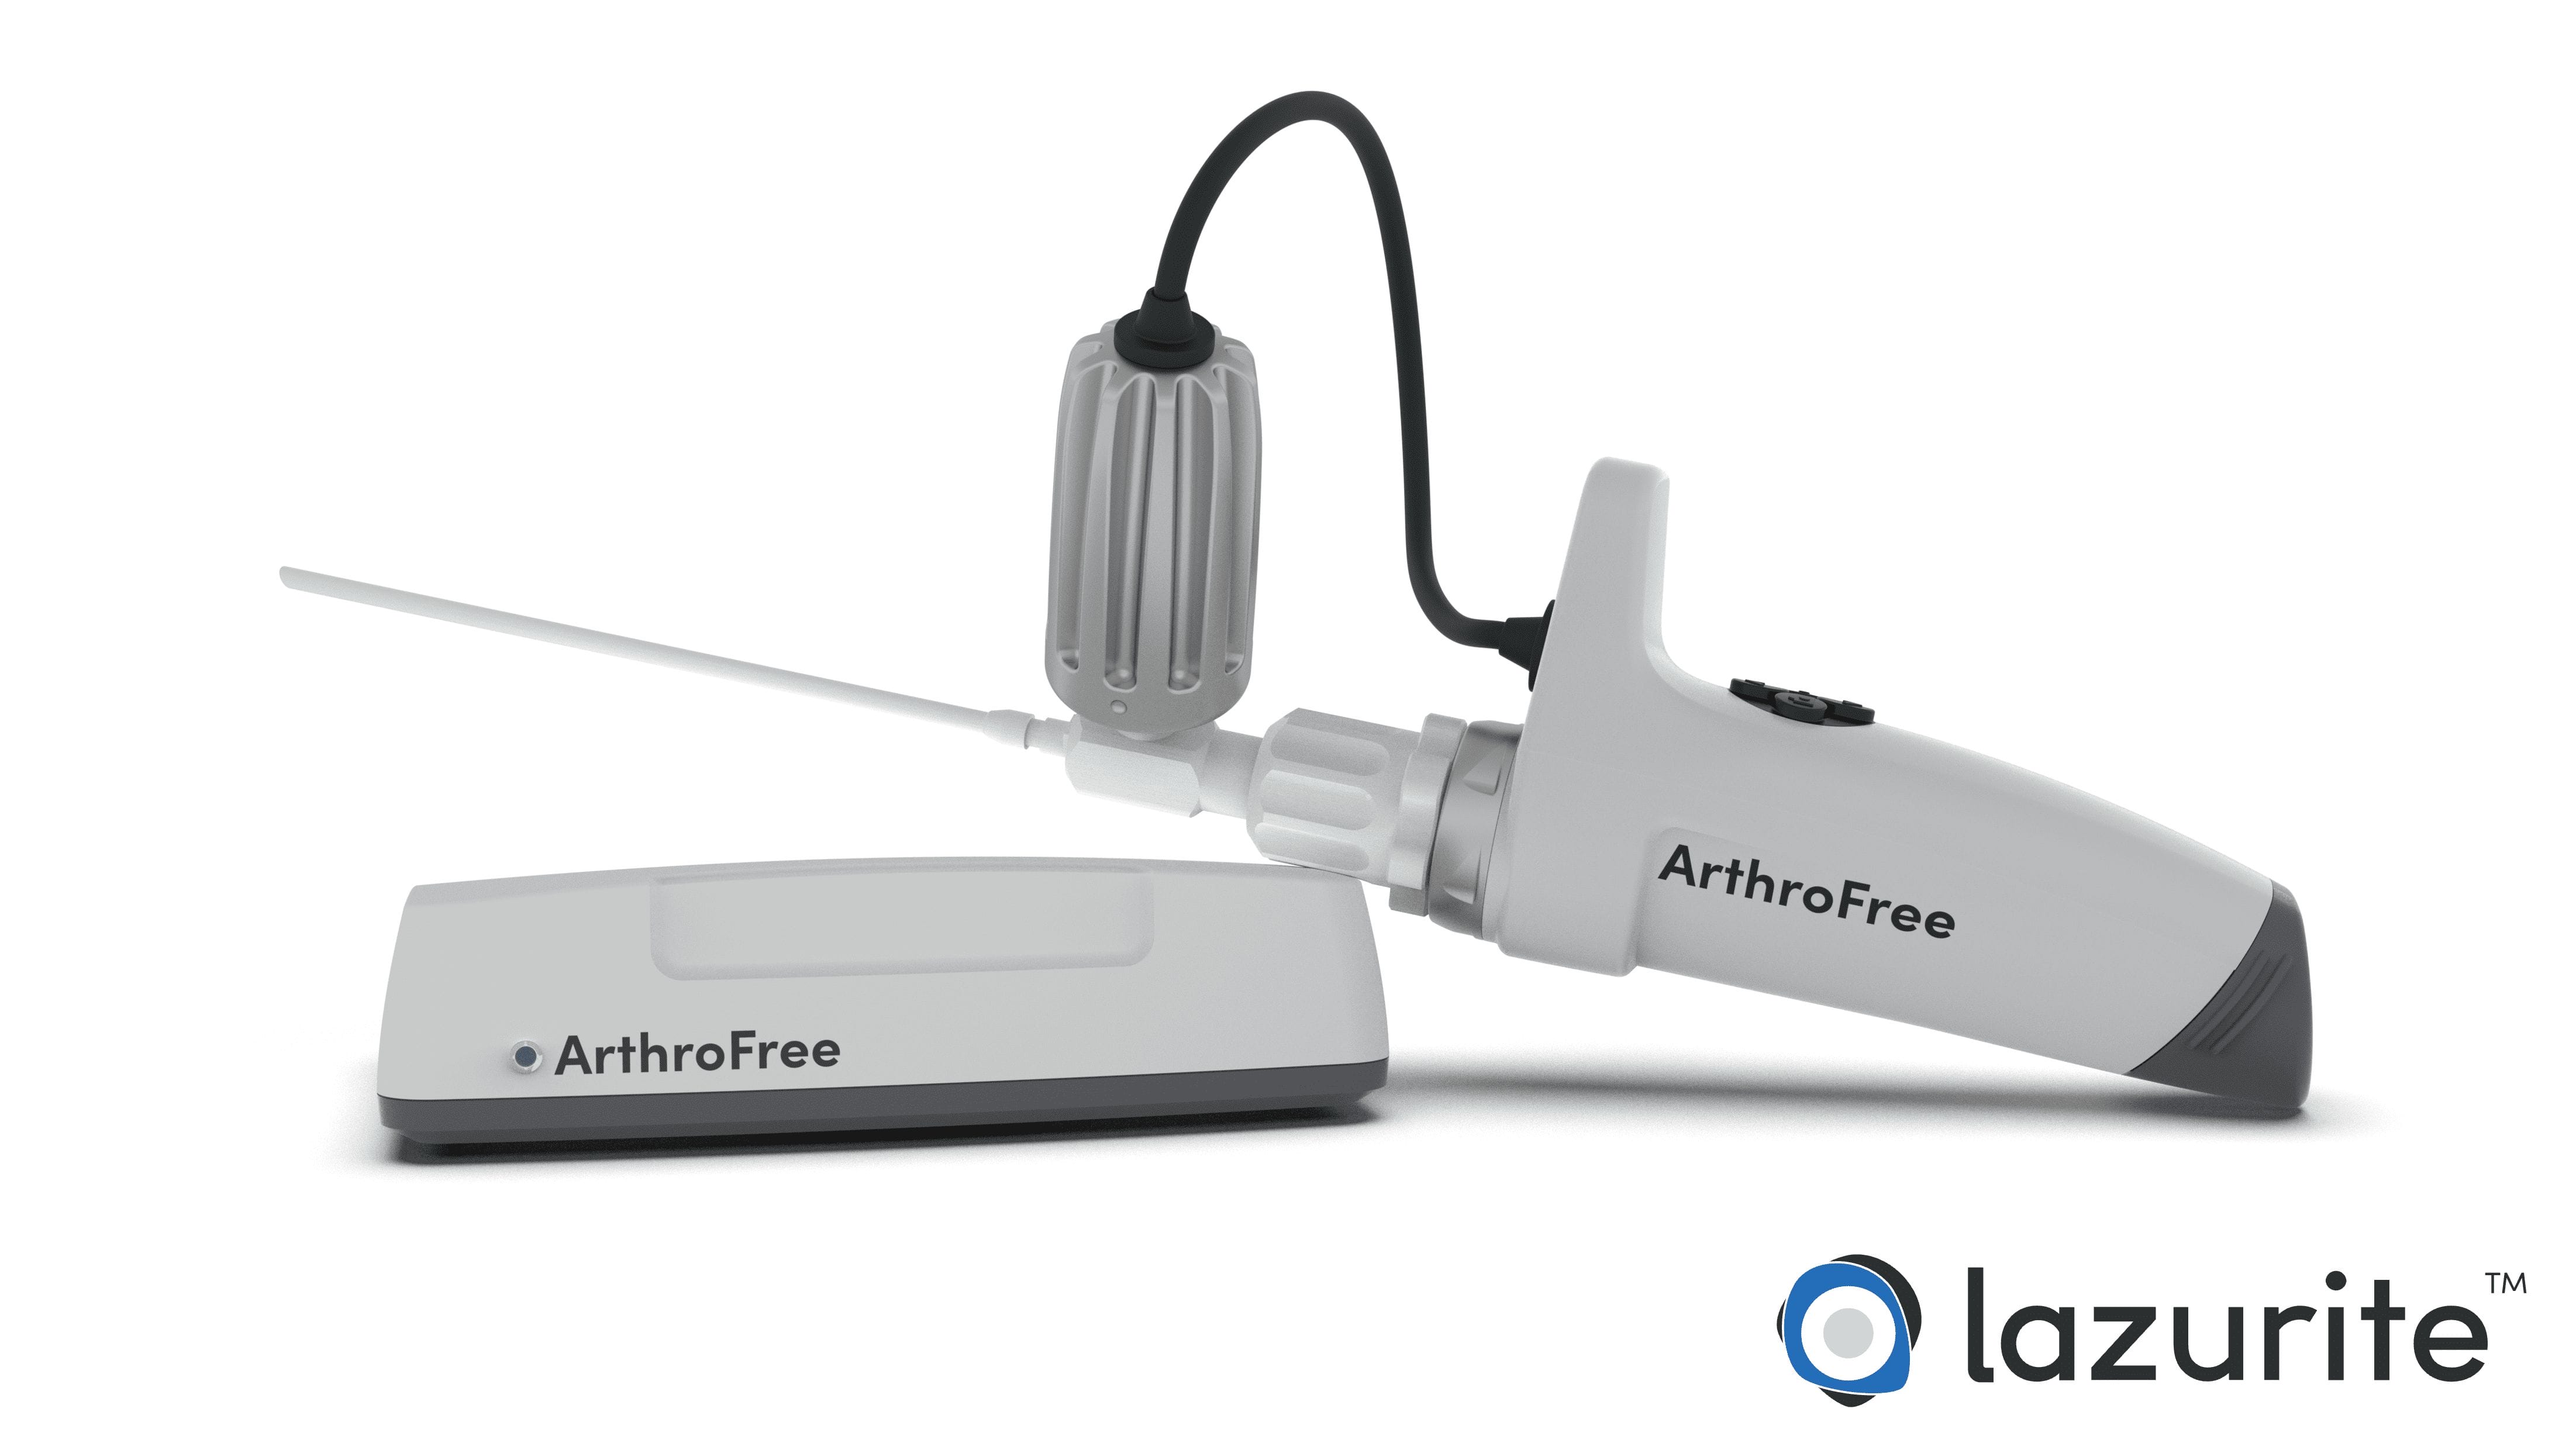 ArthroFree Wireless Camera System for Minimally Invasive Surgery Receives FDA Market Clearance